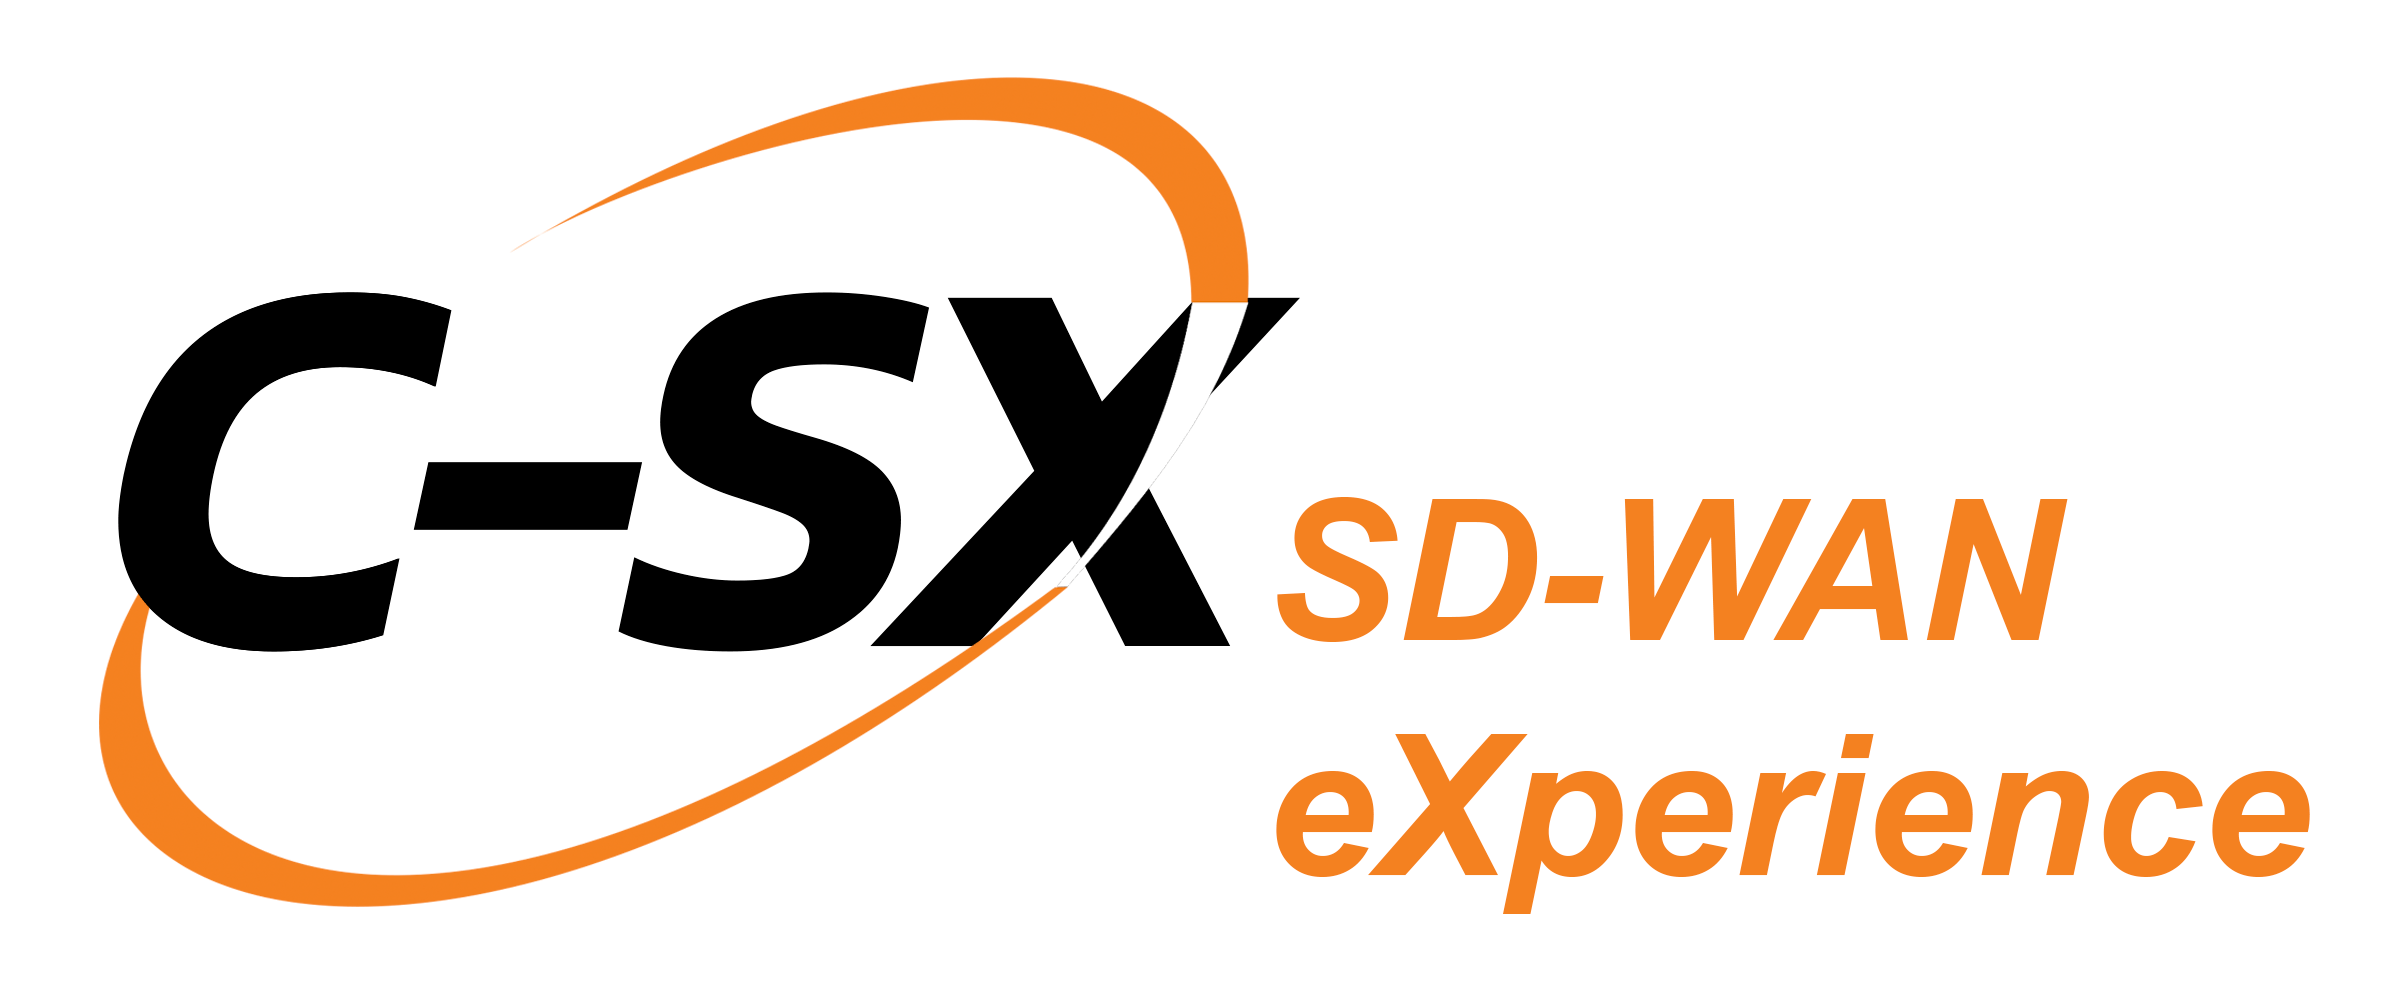 CSX CLAdirect logo